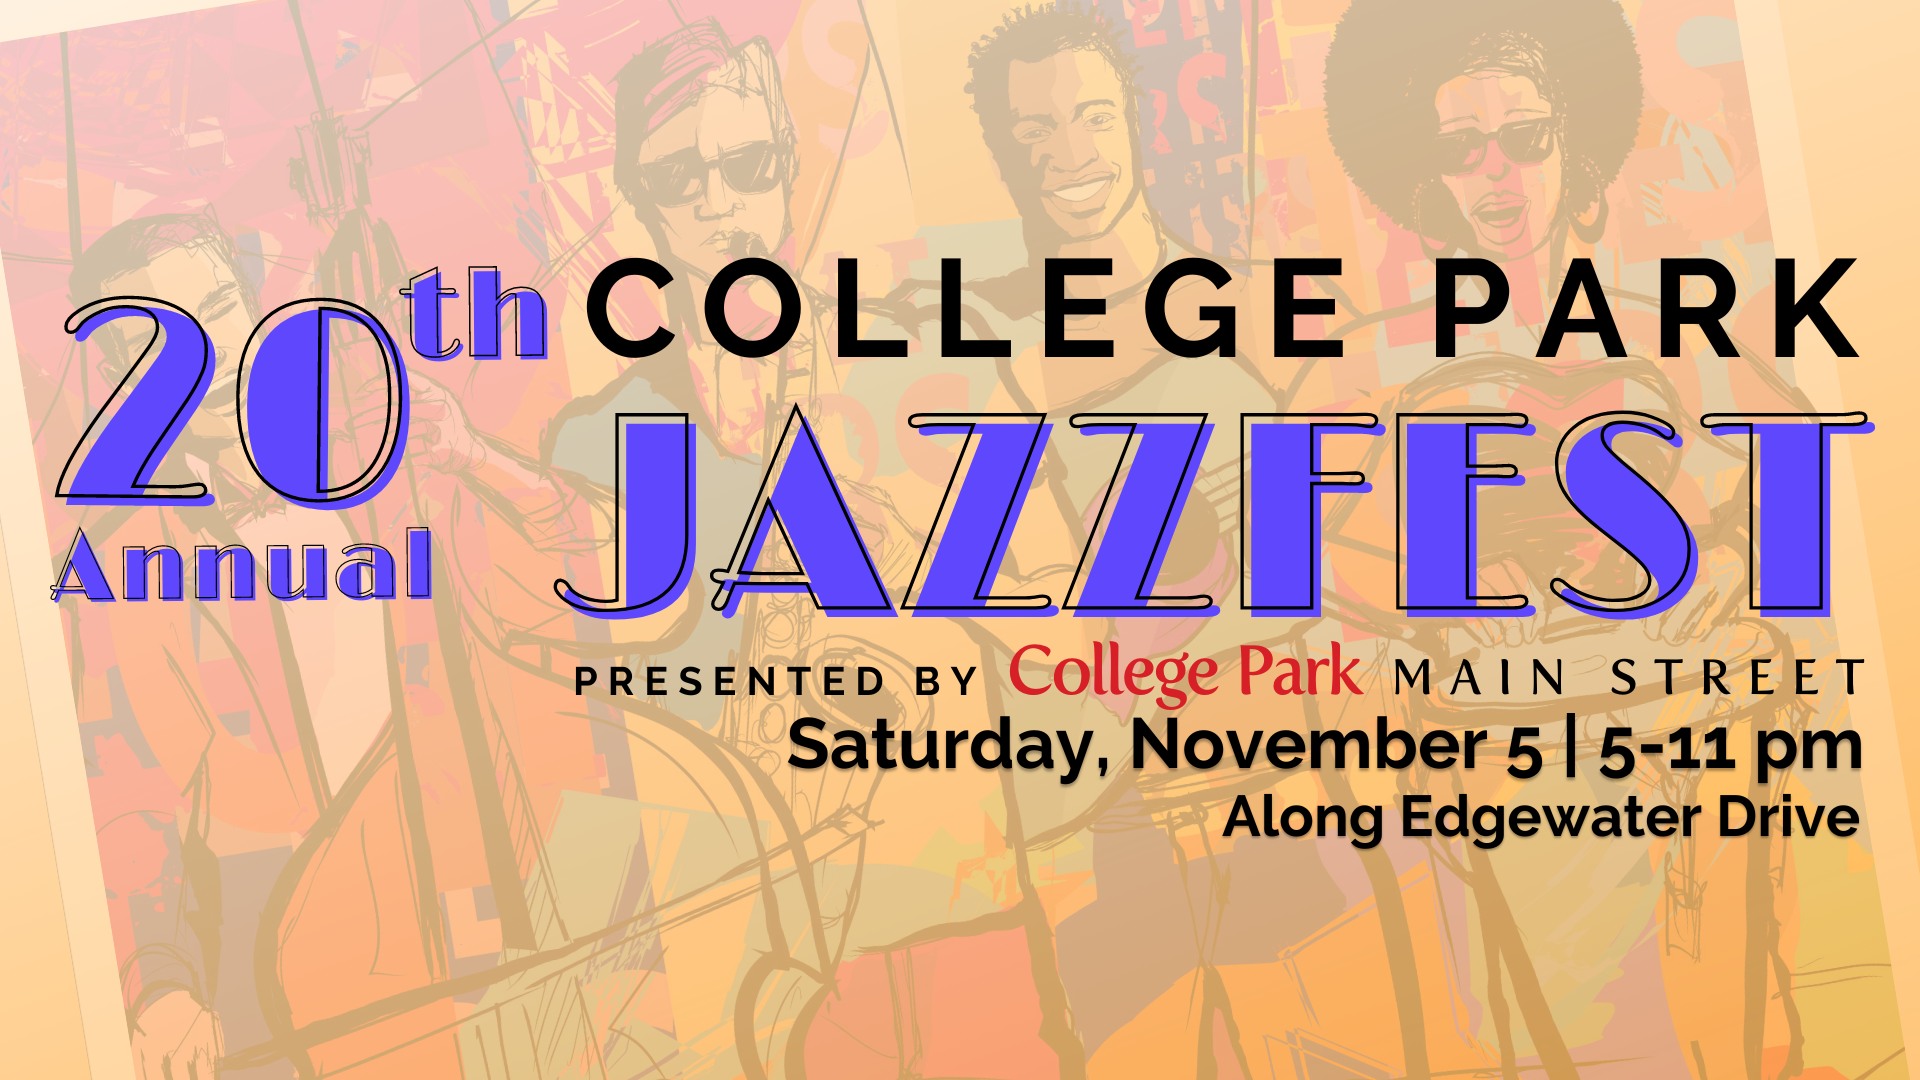 20th Annual College Park Jazz Fest